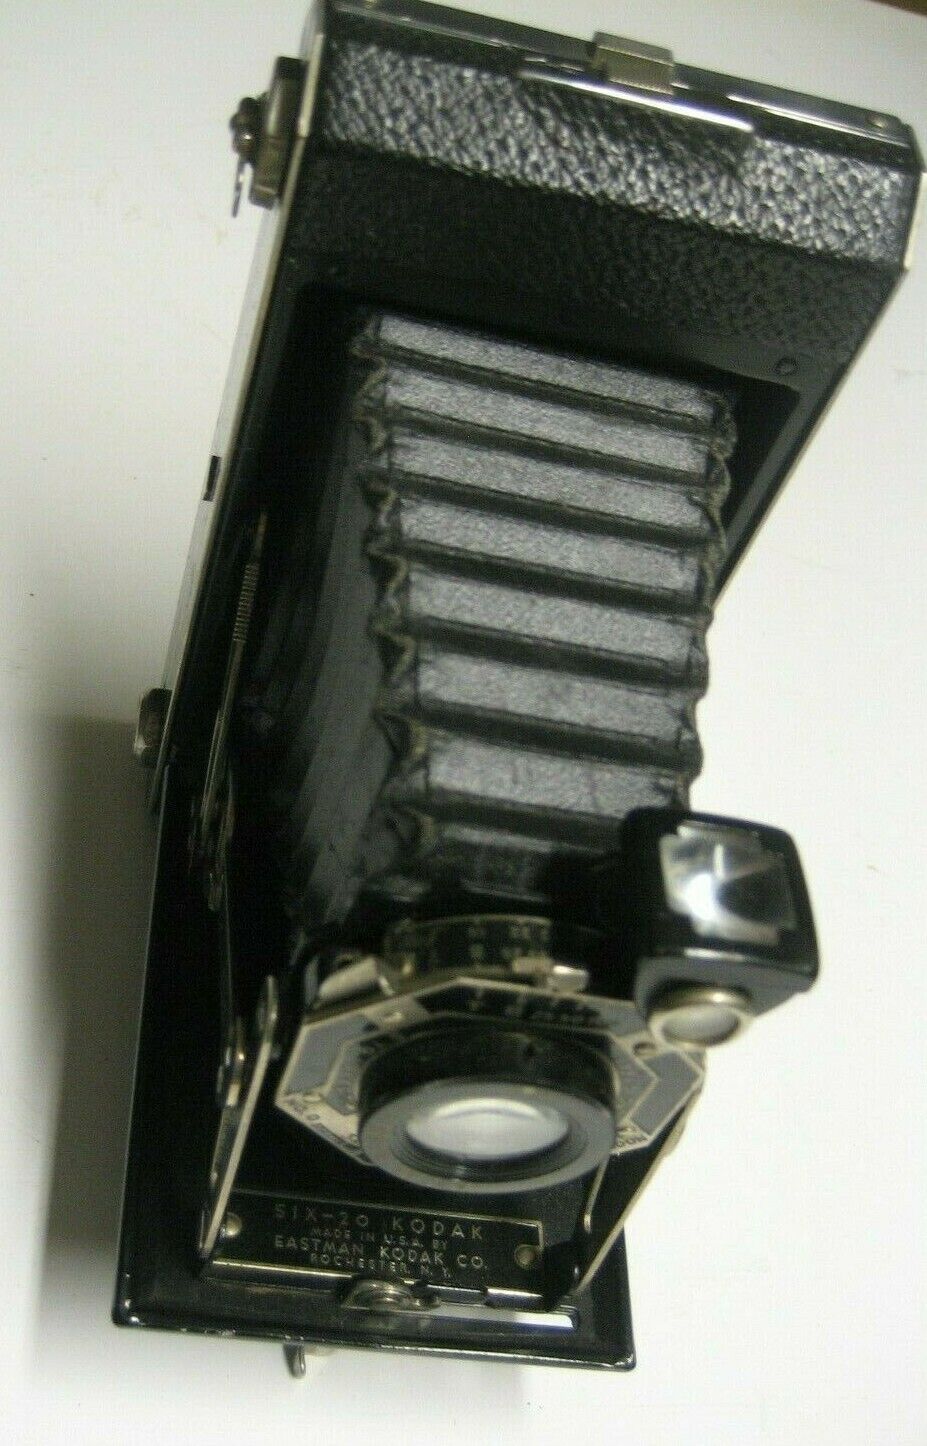 Vintage Kodak Doublet Folding Camera,1930s era